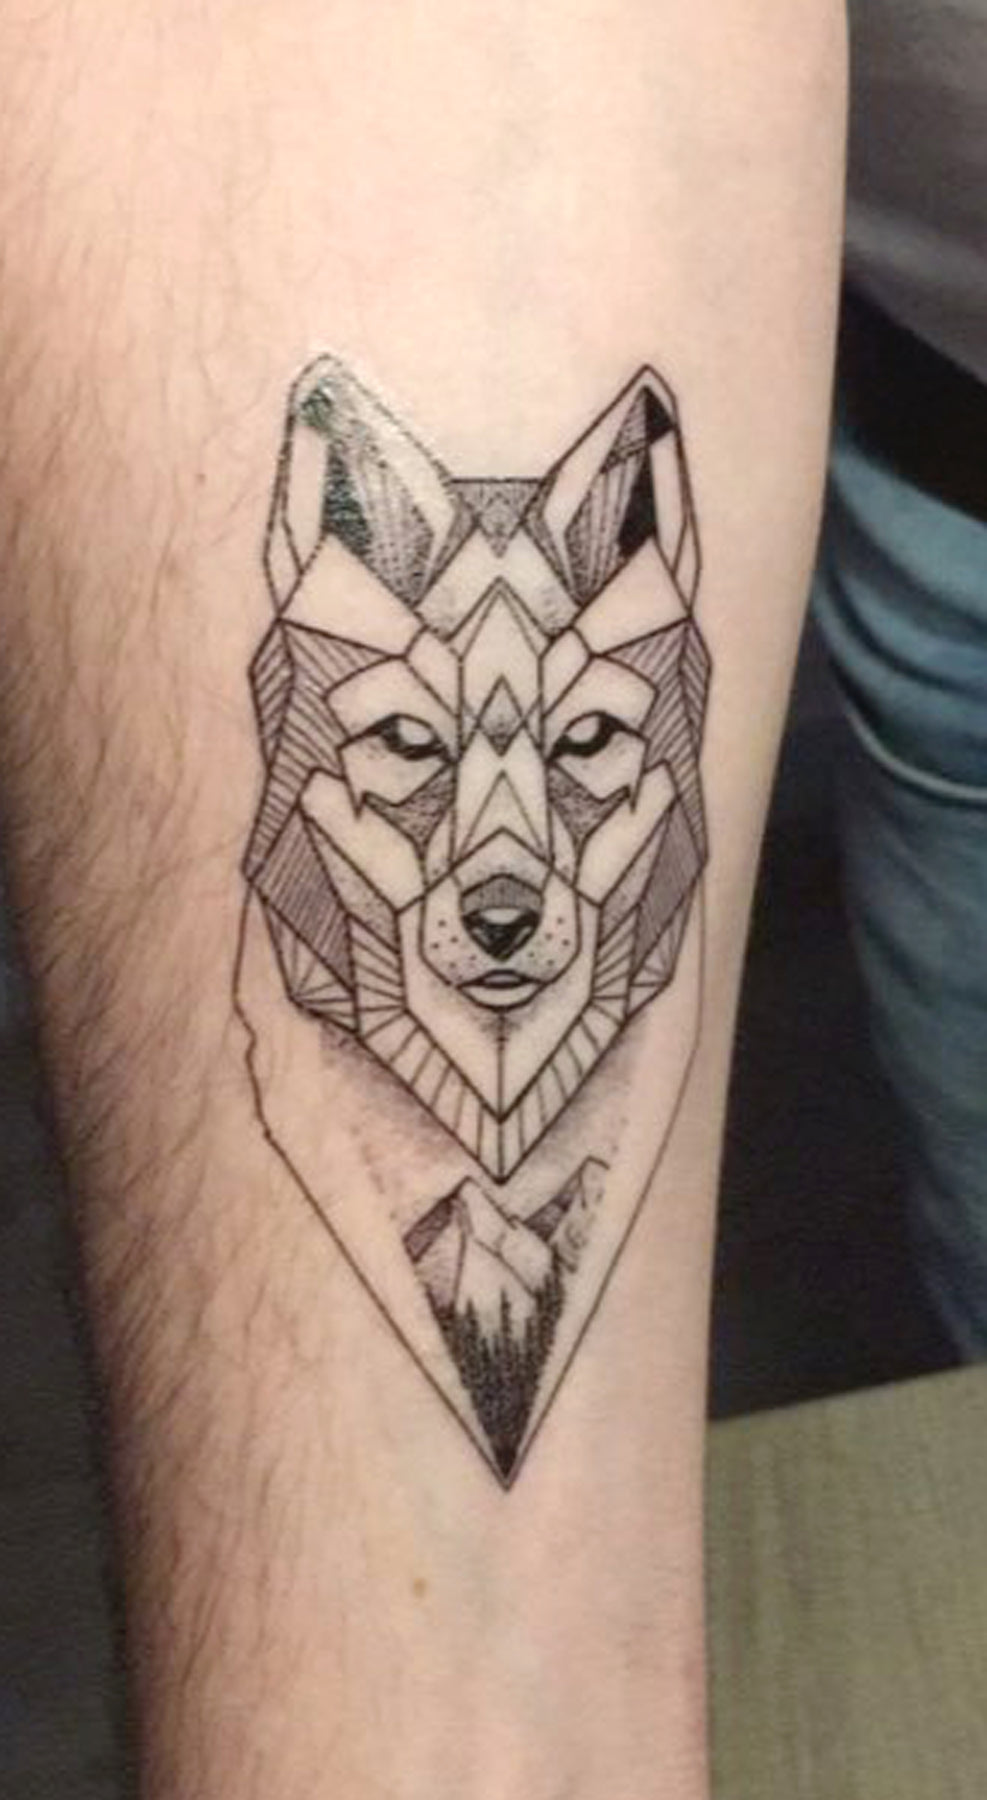 Wolf scene WIP by the Uber... - Neon Wolf Tattoo Studio | Facebook